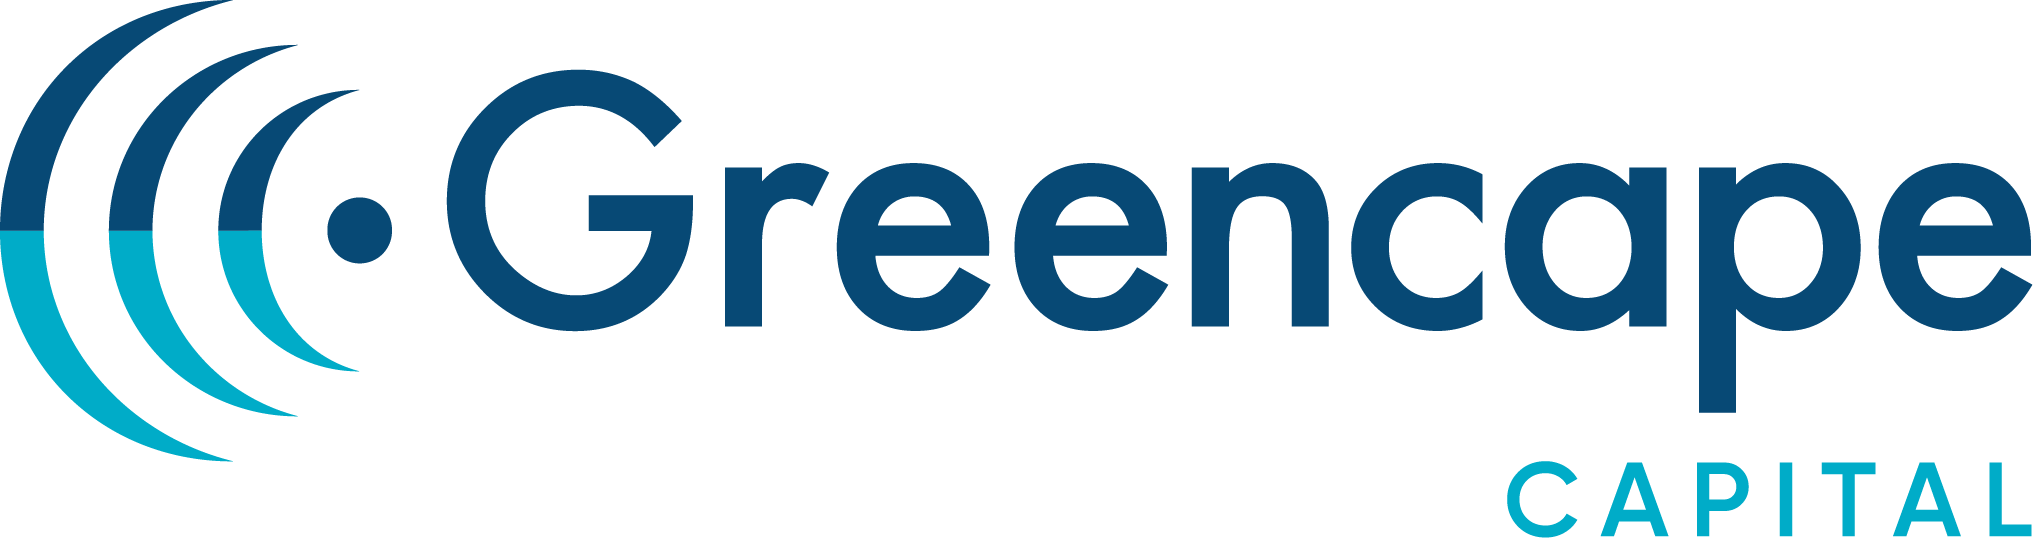 Greencape Logo